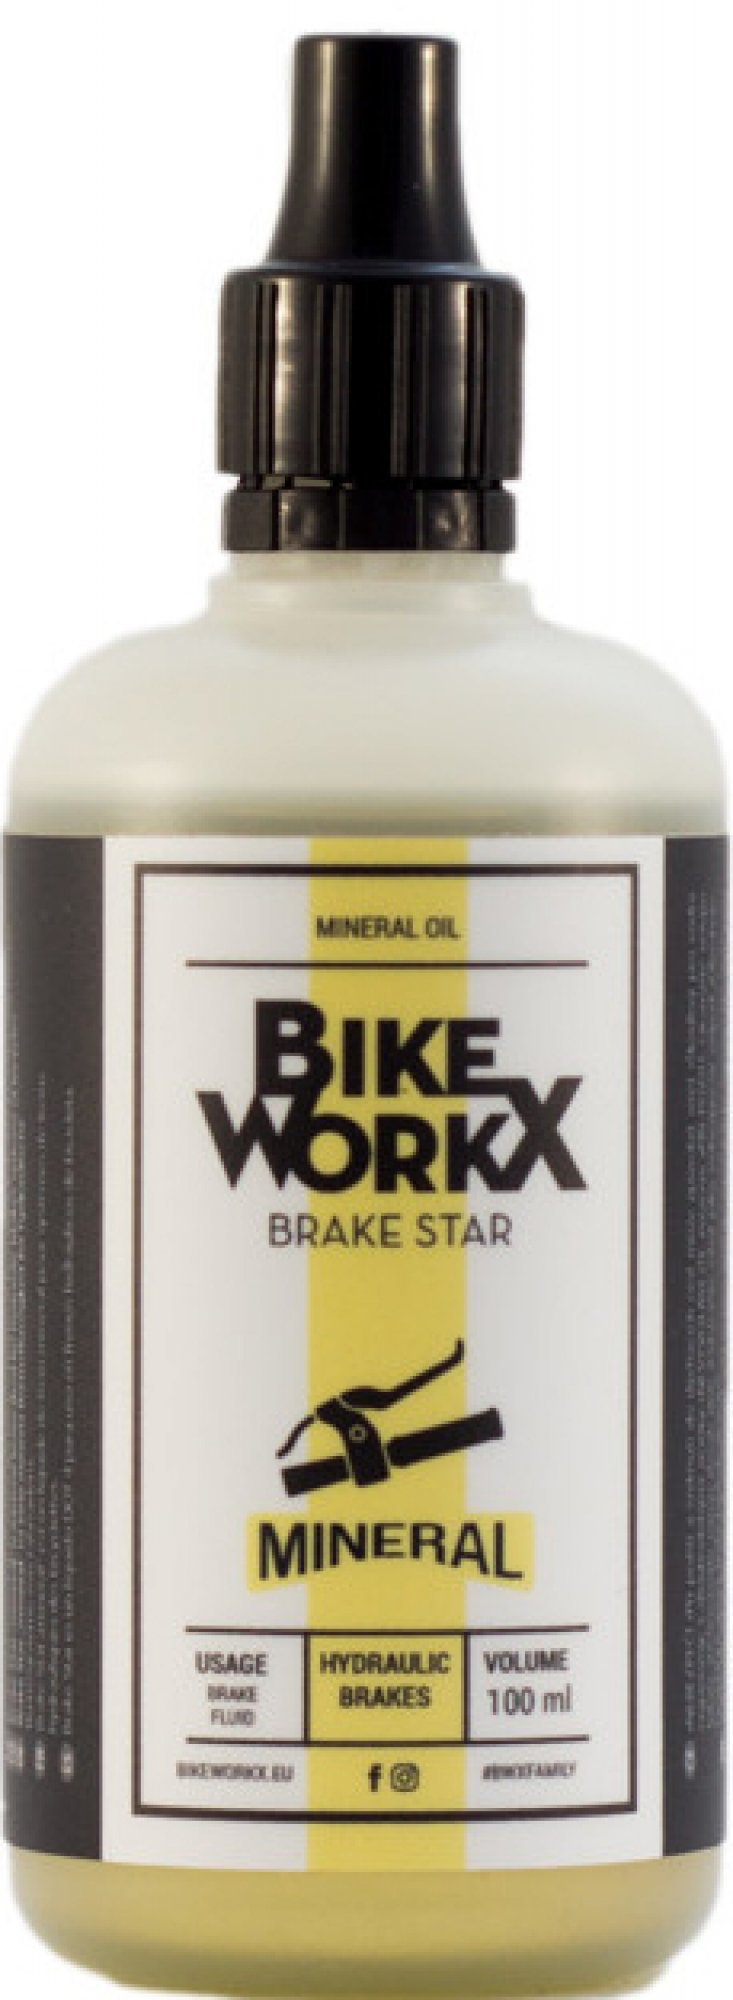 BikeWorkx Brake Star mineral 100 ml